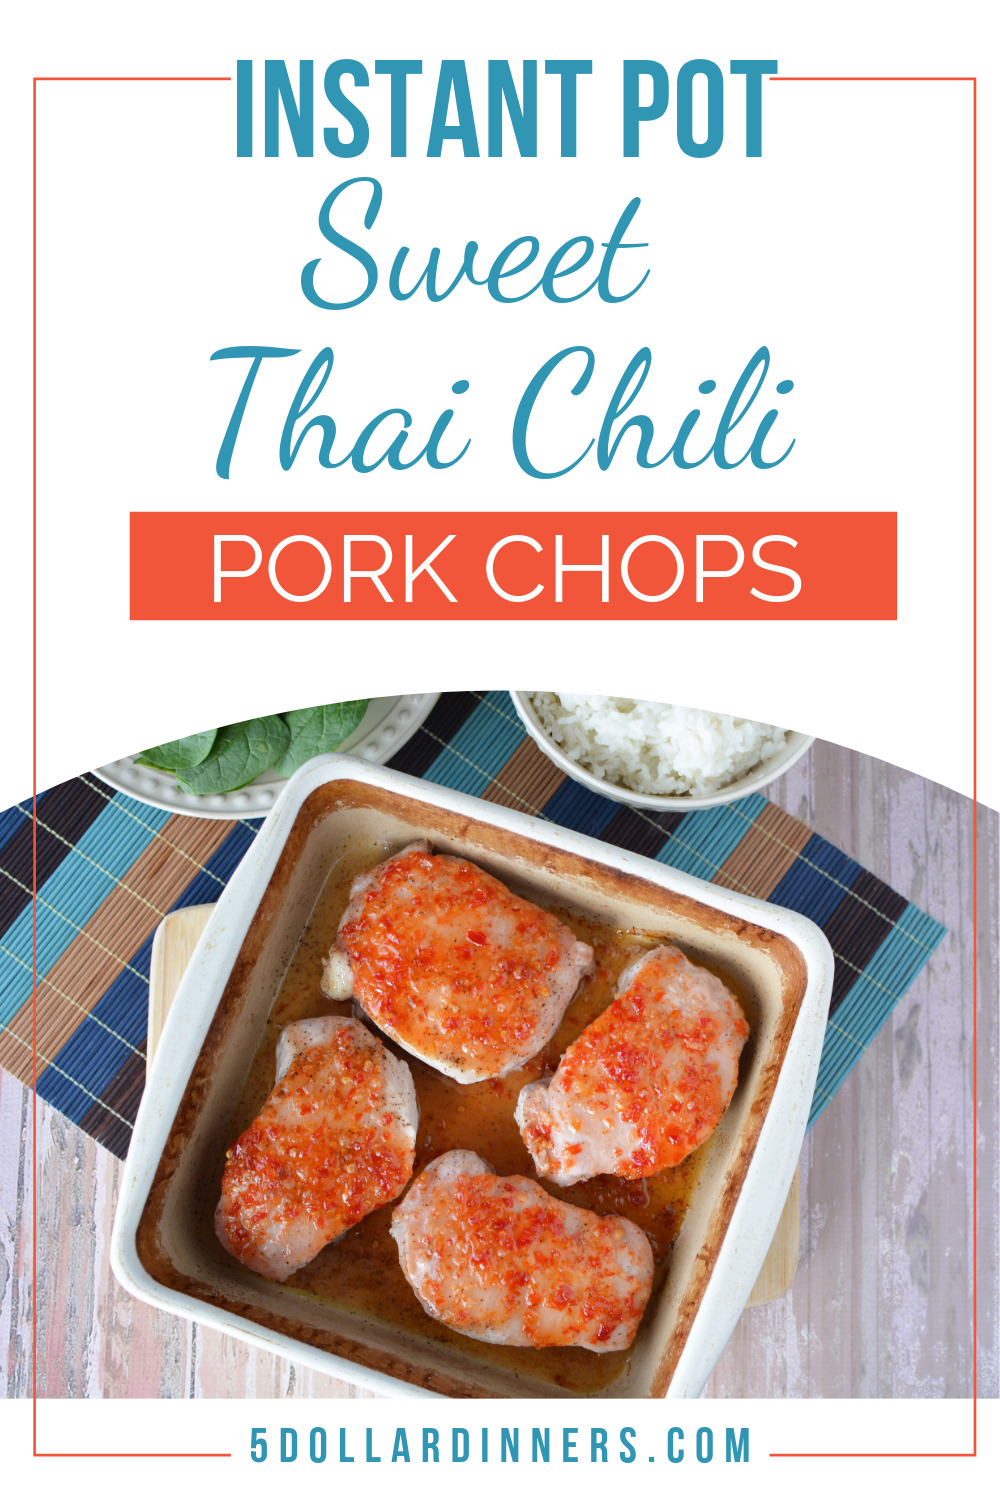 Instant Pot Sweet Chili Pork Chops Recipe